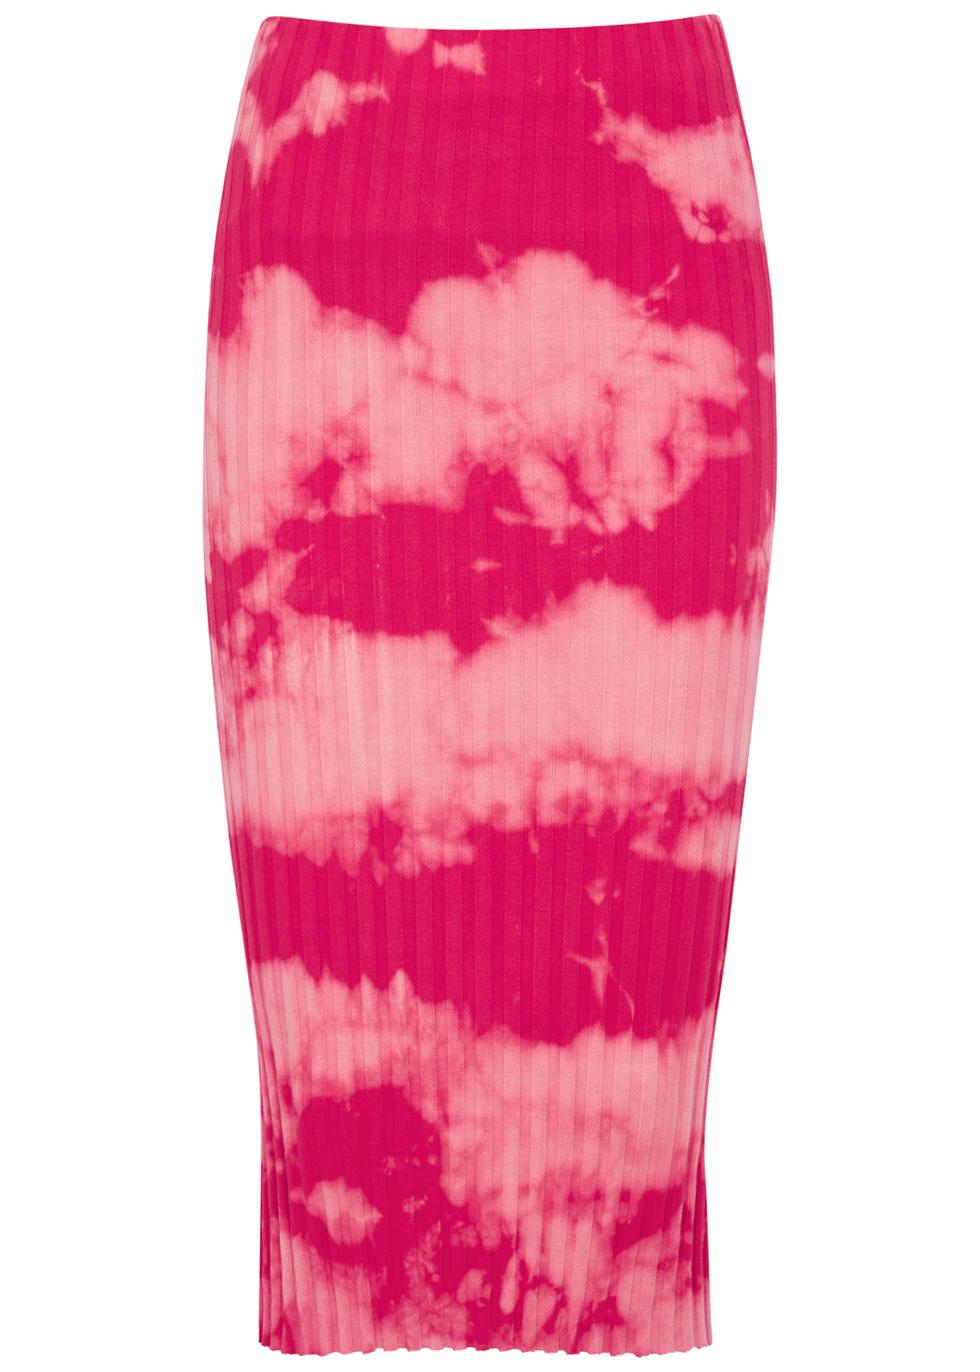 Capri pink tie-dyed stretch-cotton midi skirt by COTTON CITIZEN